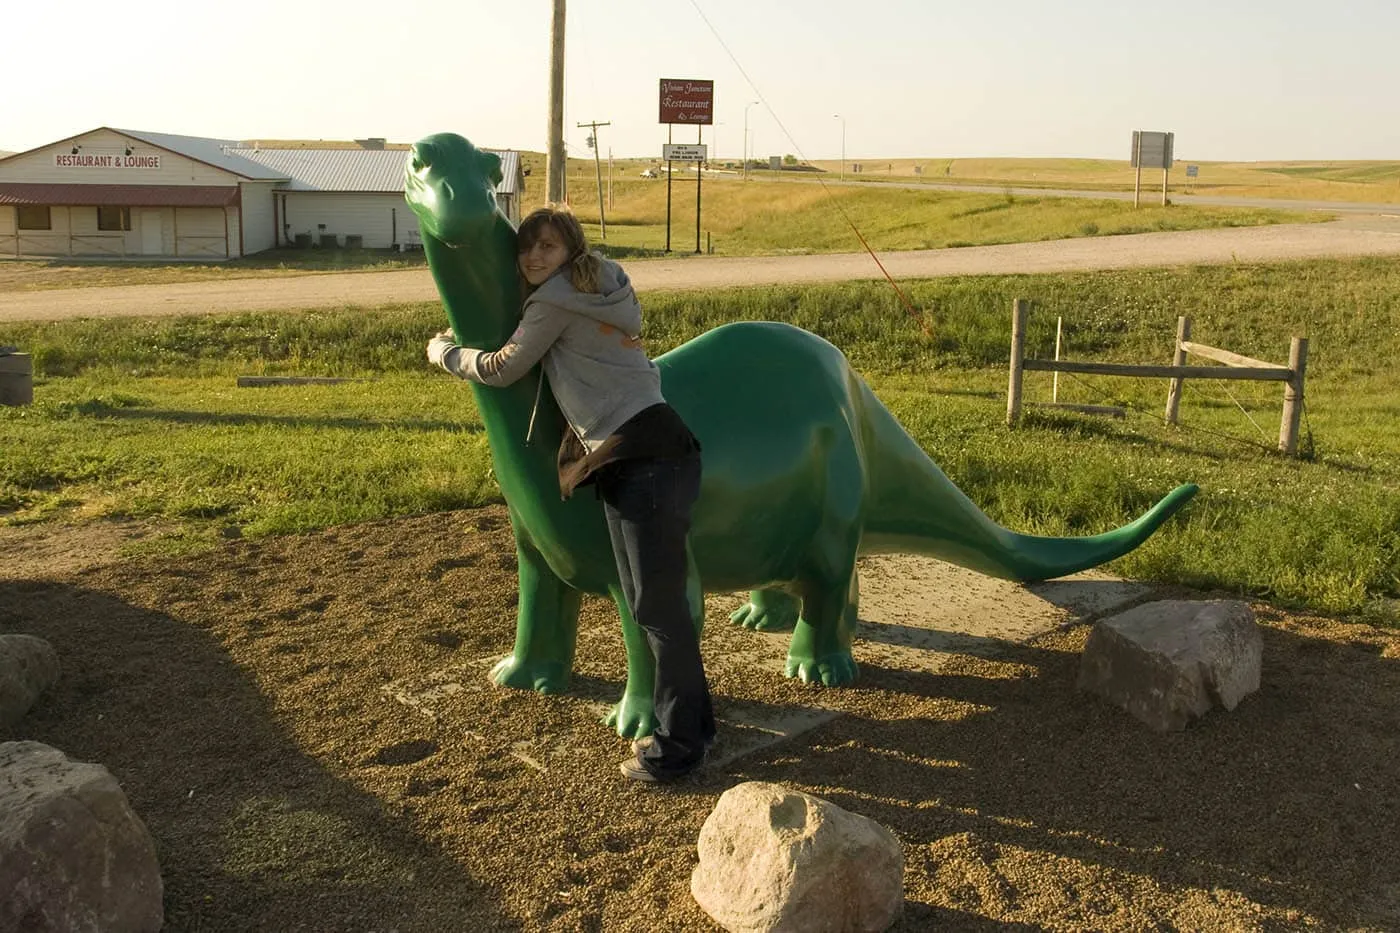 The Sinclair Oil Dinosaur at a Gas Station in South Dakota.